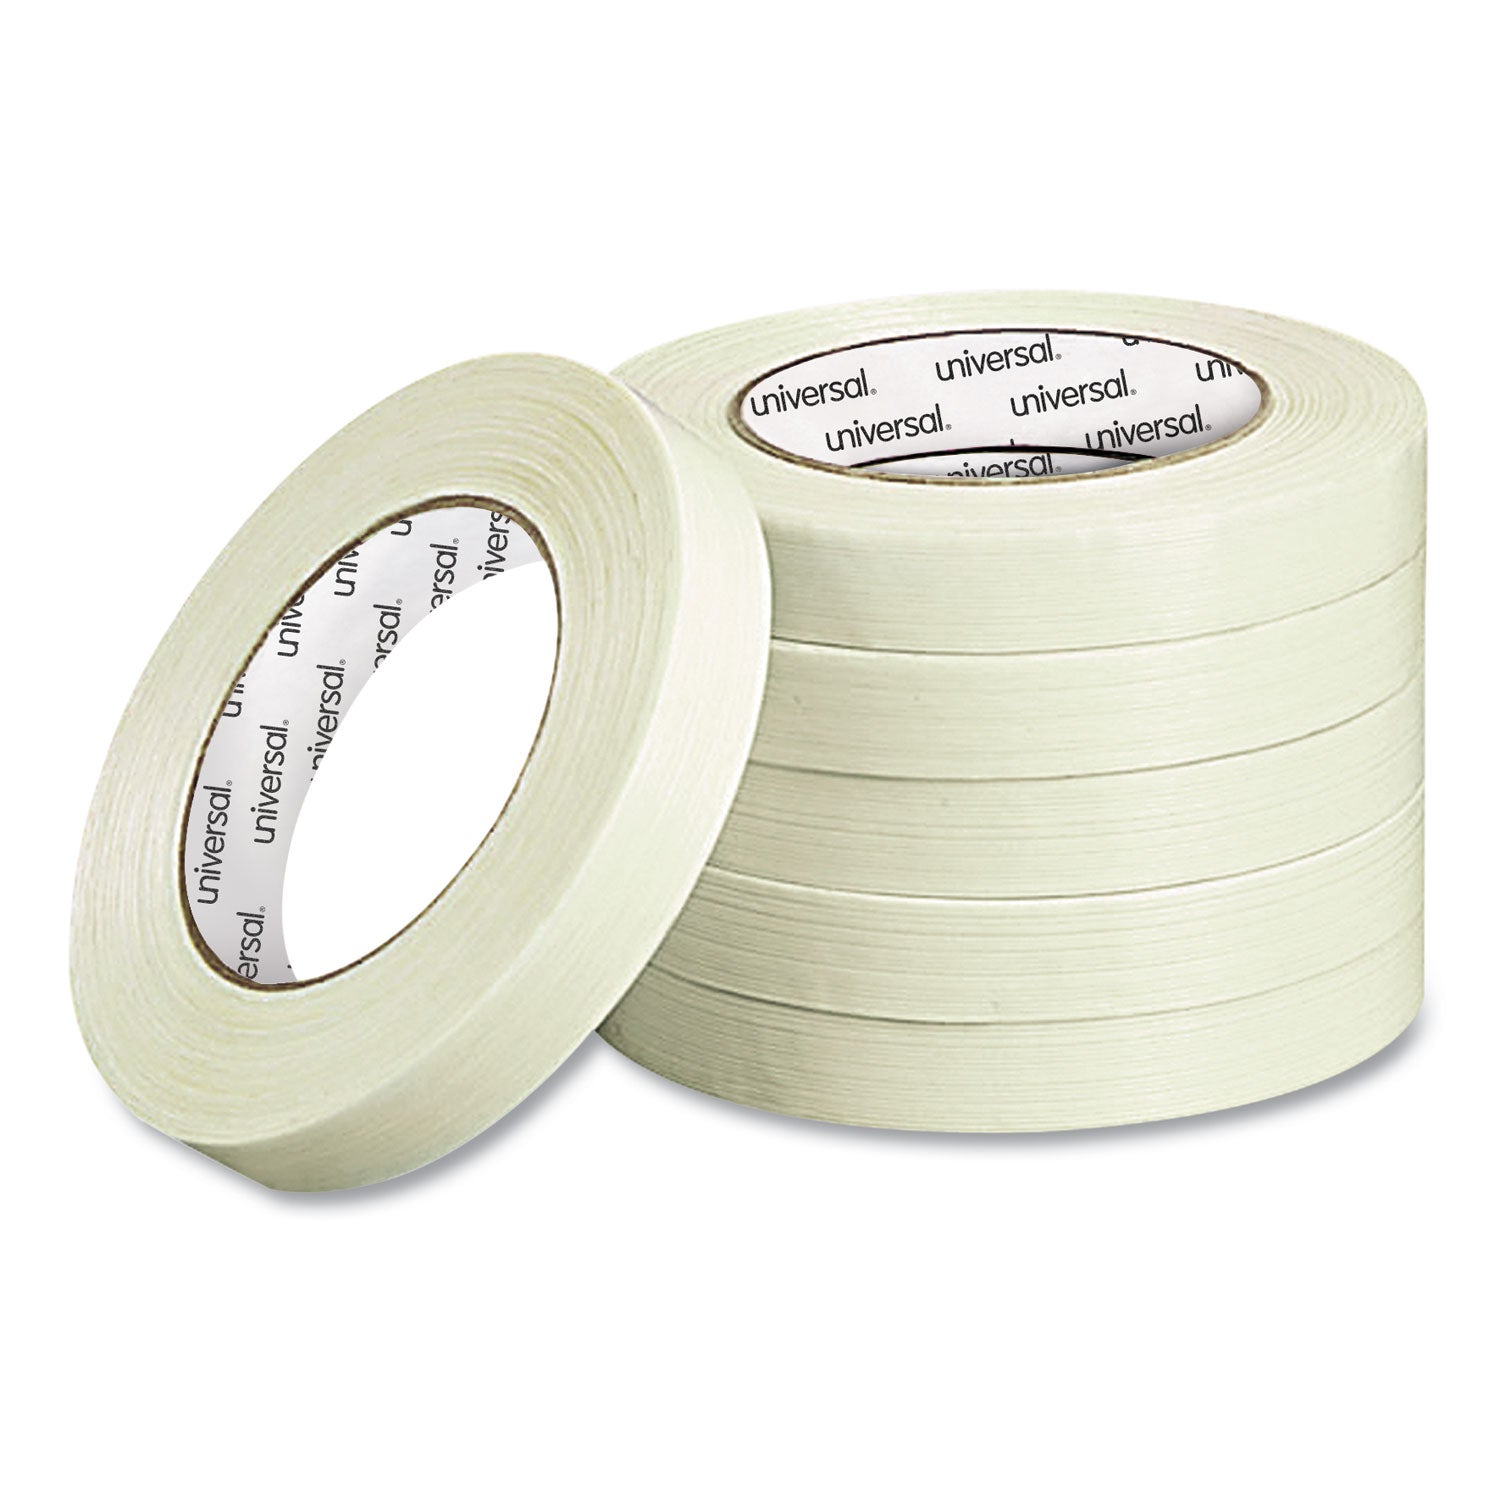 190# Medium Grade Filament Tape, 3" Core, 18 mm x 54.8 m, Clear - 